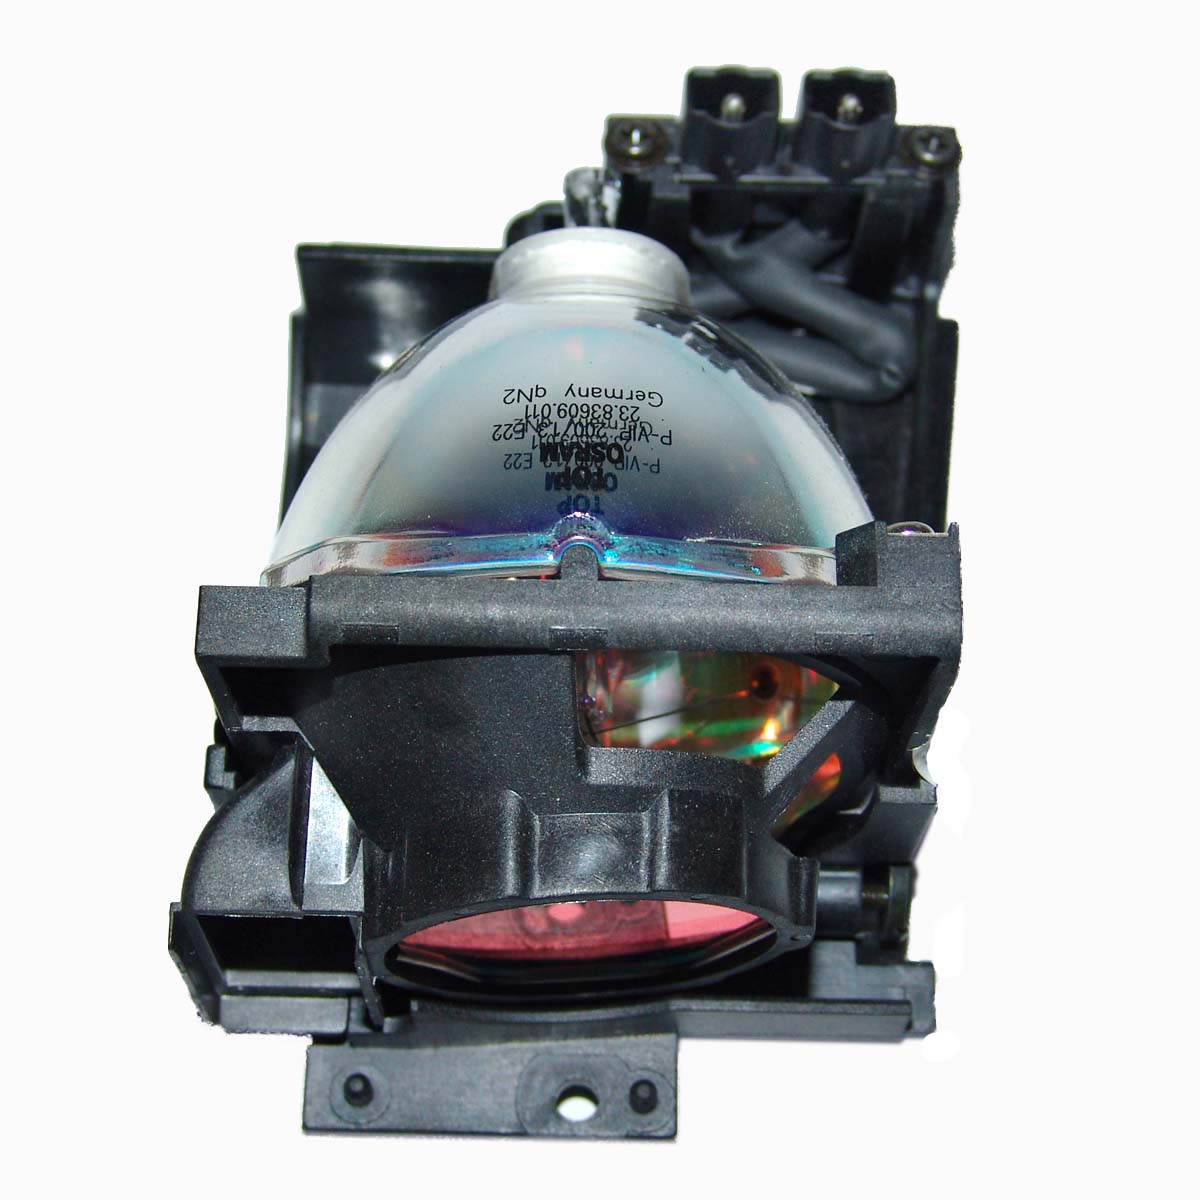 Delta 3797029900-S Osram Projector Lamp Module